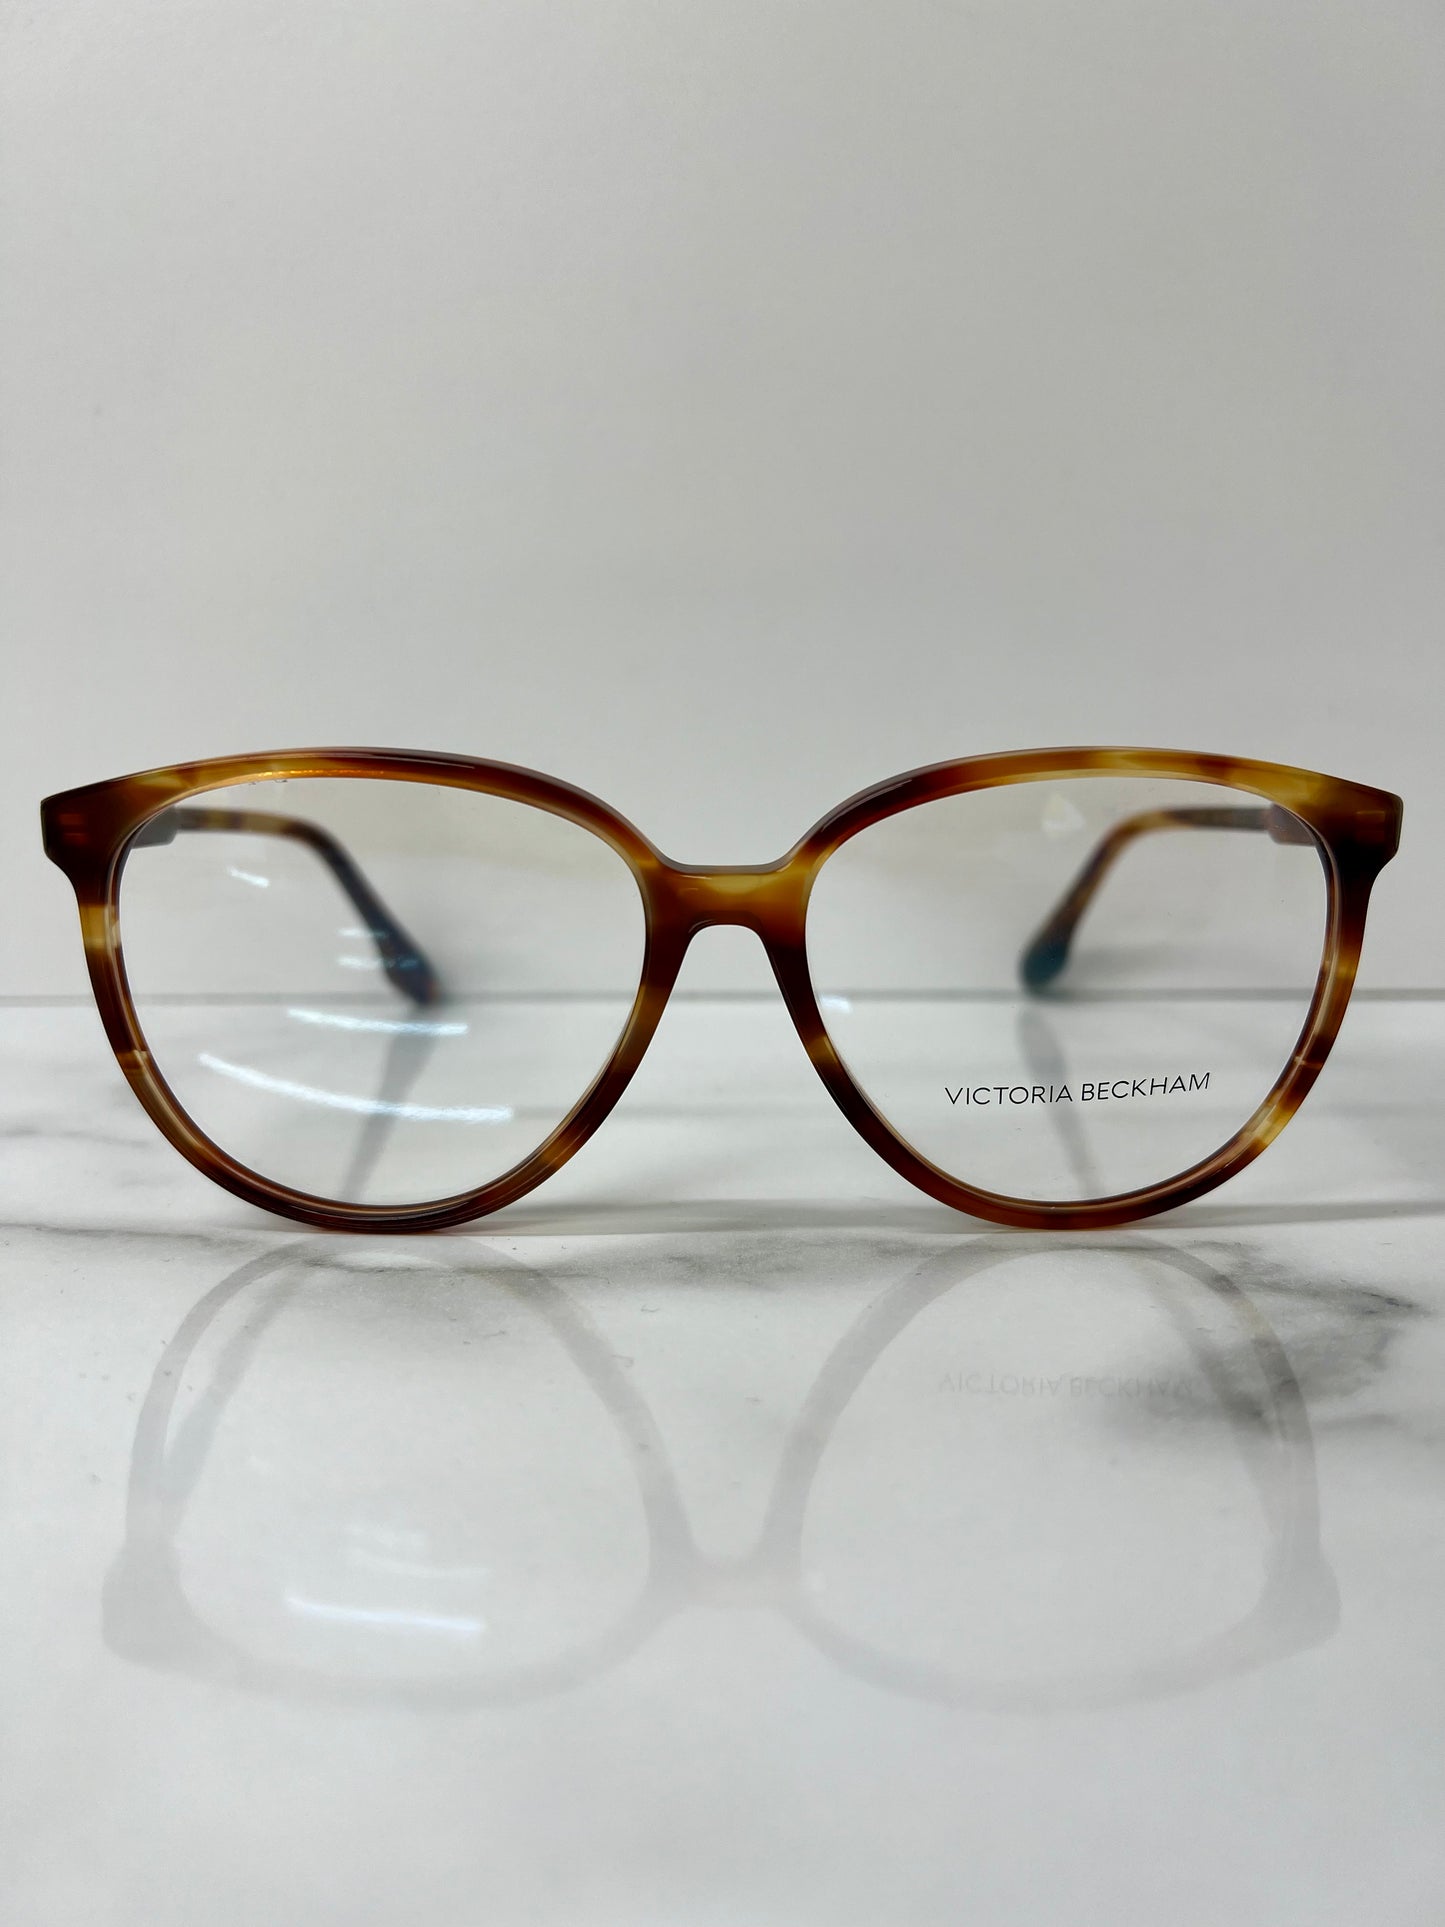 Victoria Beckham Glasses Frames Optical Women Chocolate Swirl Eyeglasses VB2619